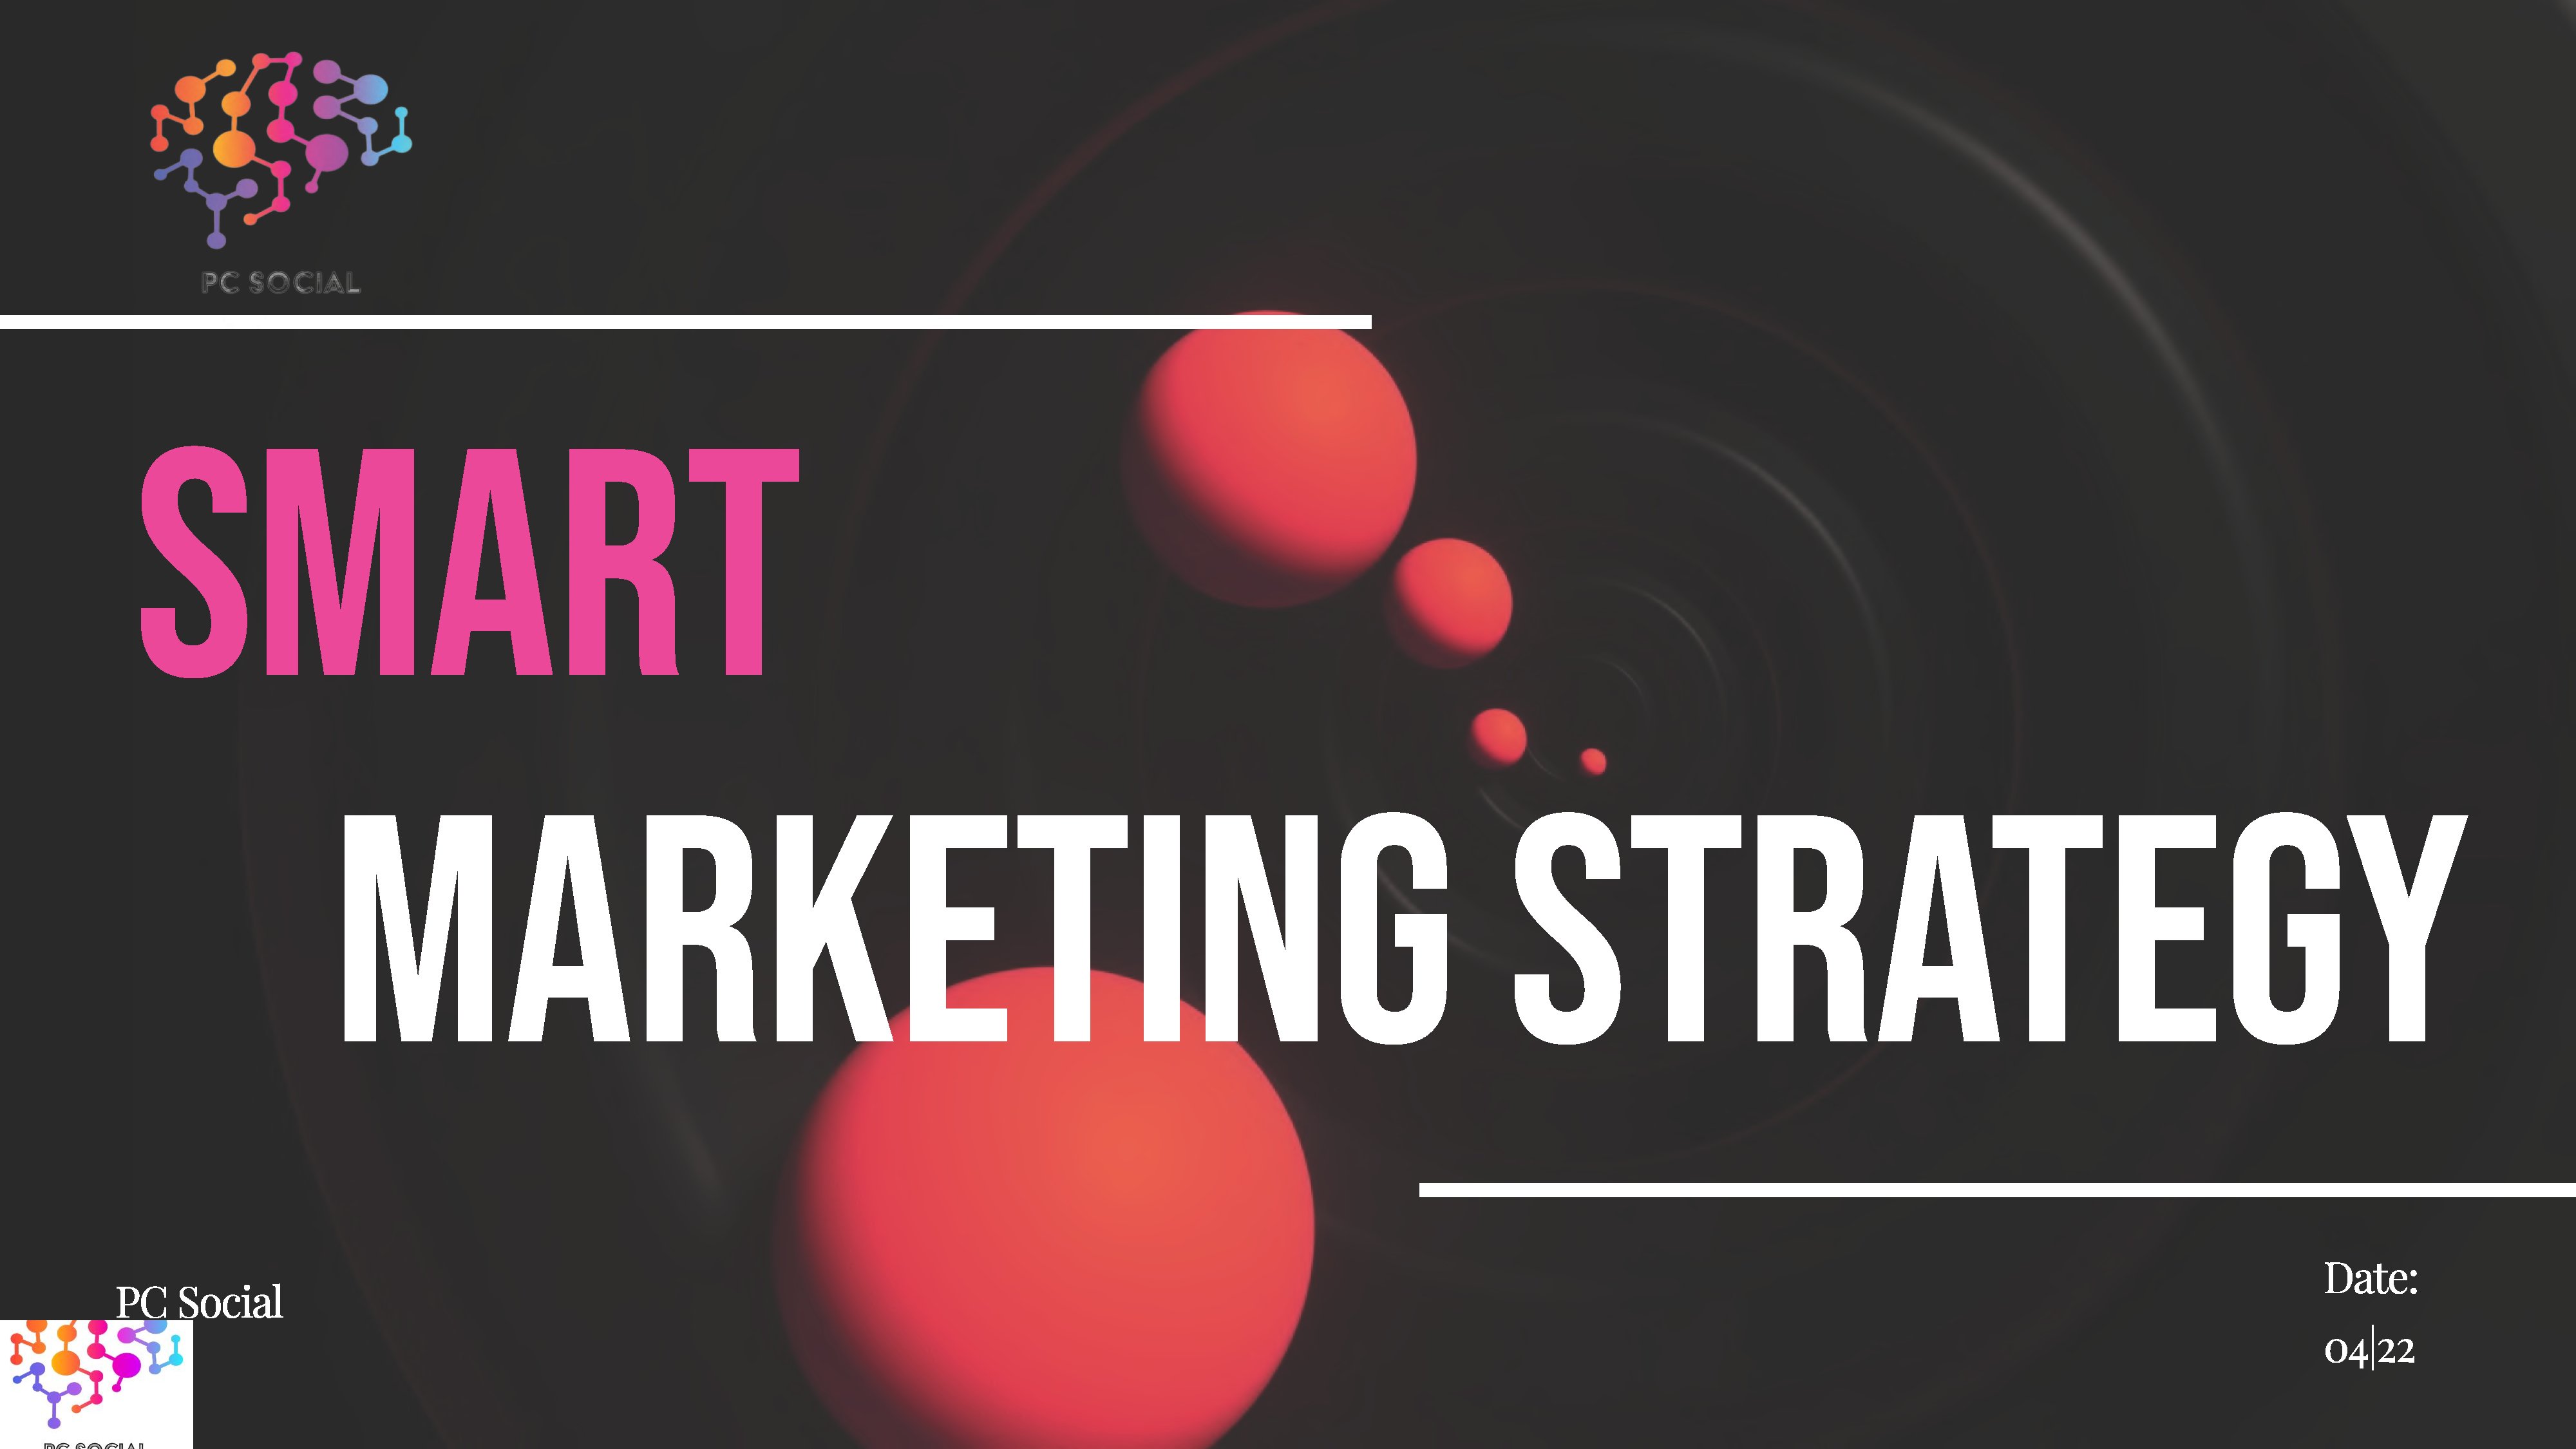 Marketing, Strategy, SMART, Intelligent, Strategy, Insights, Marketing, Data, Research, Branding